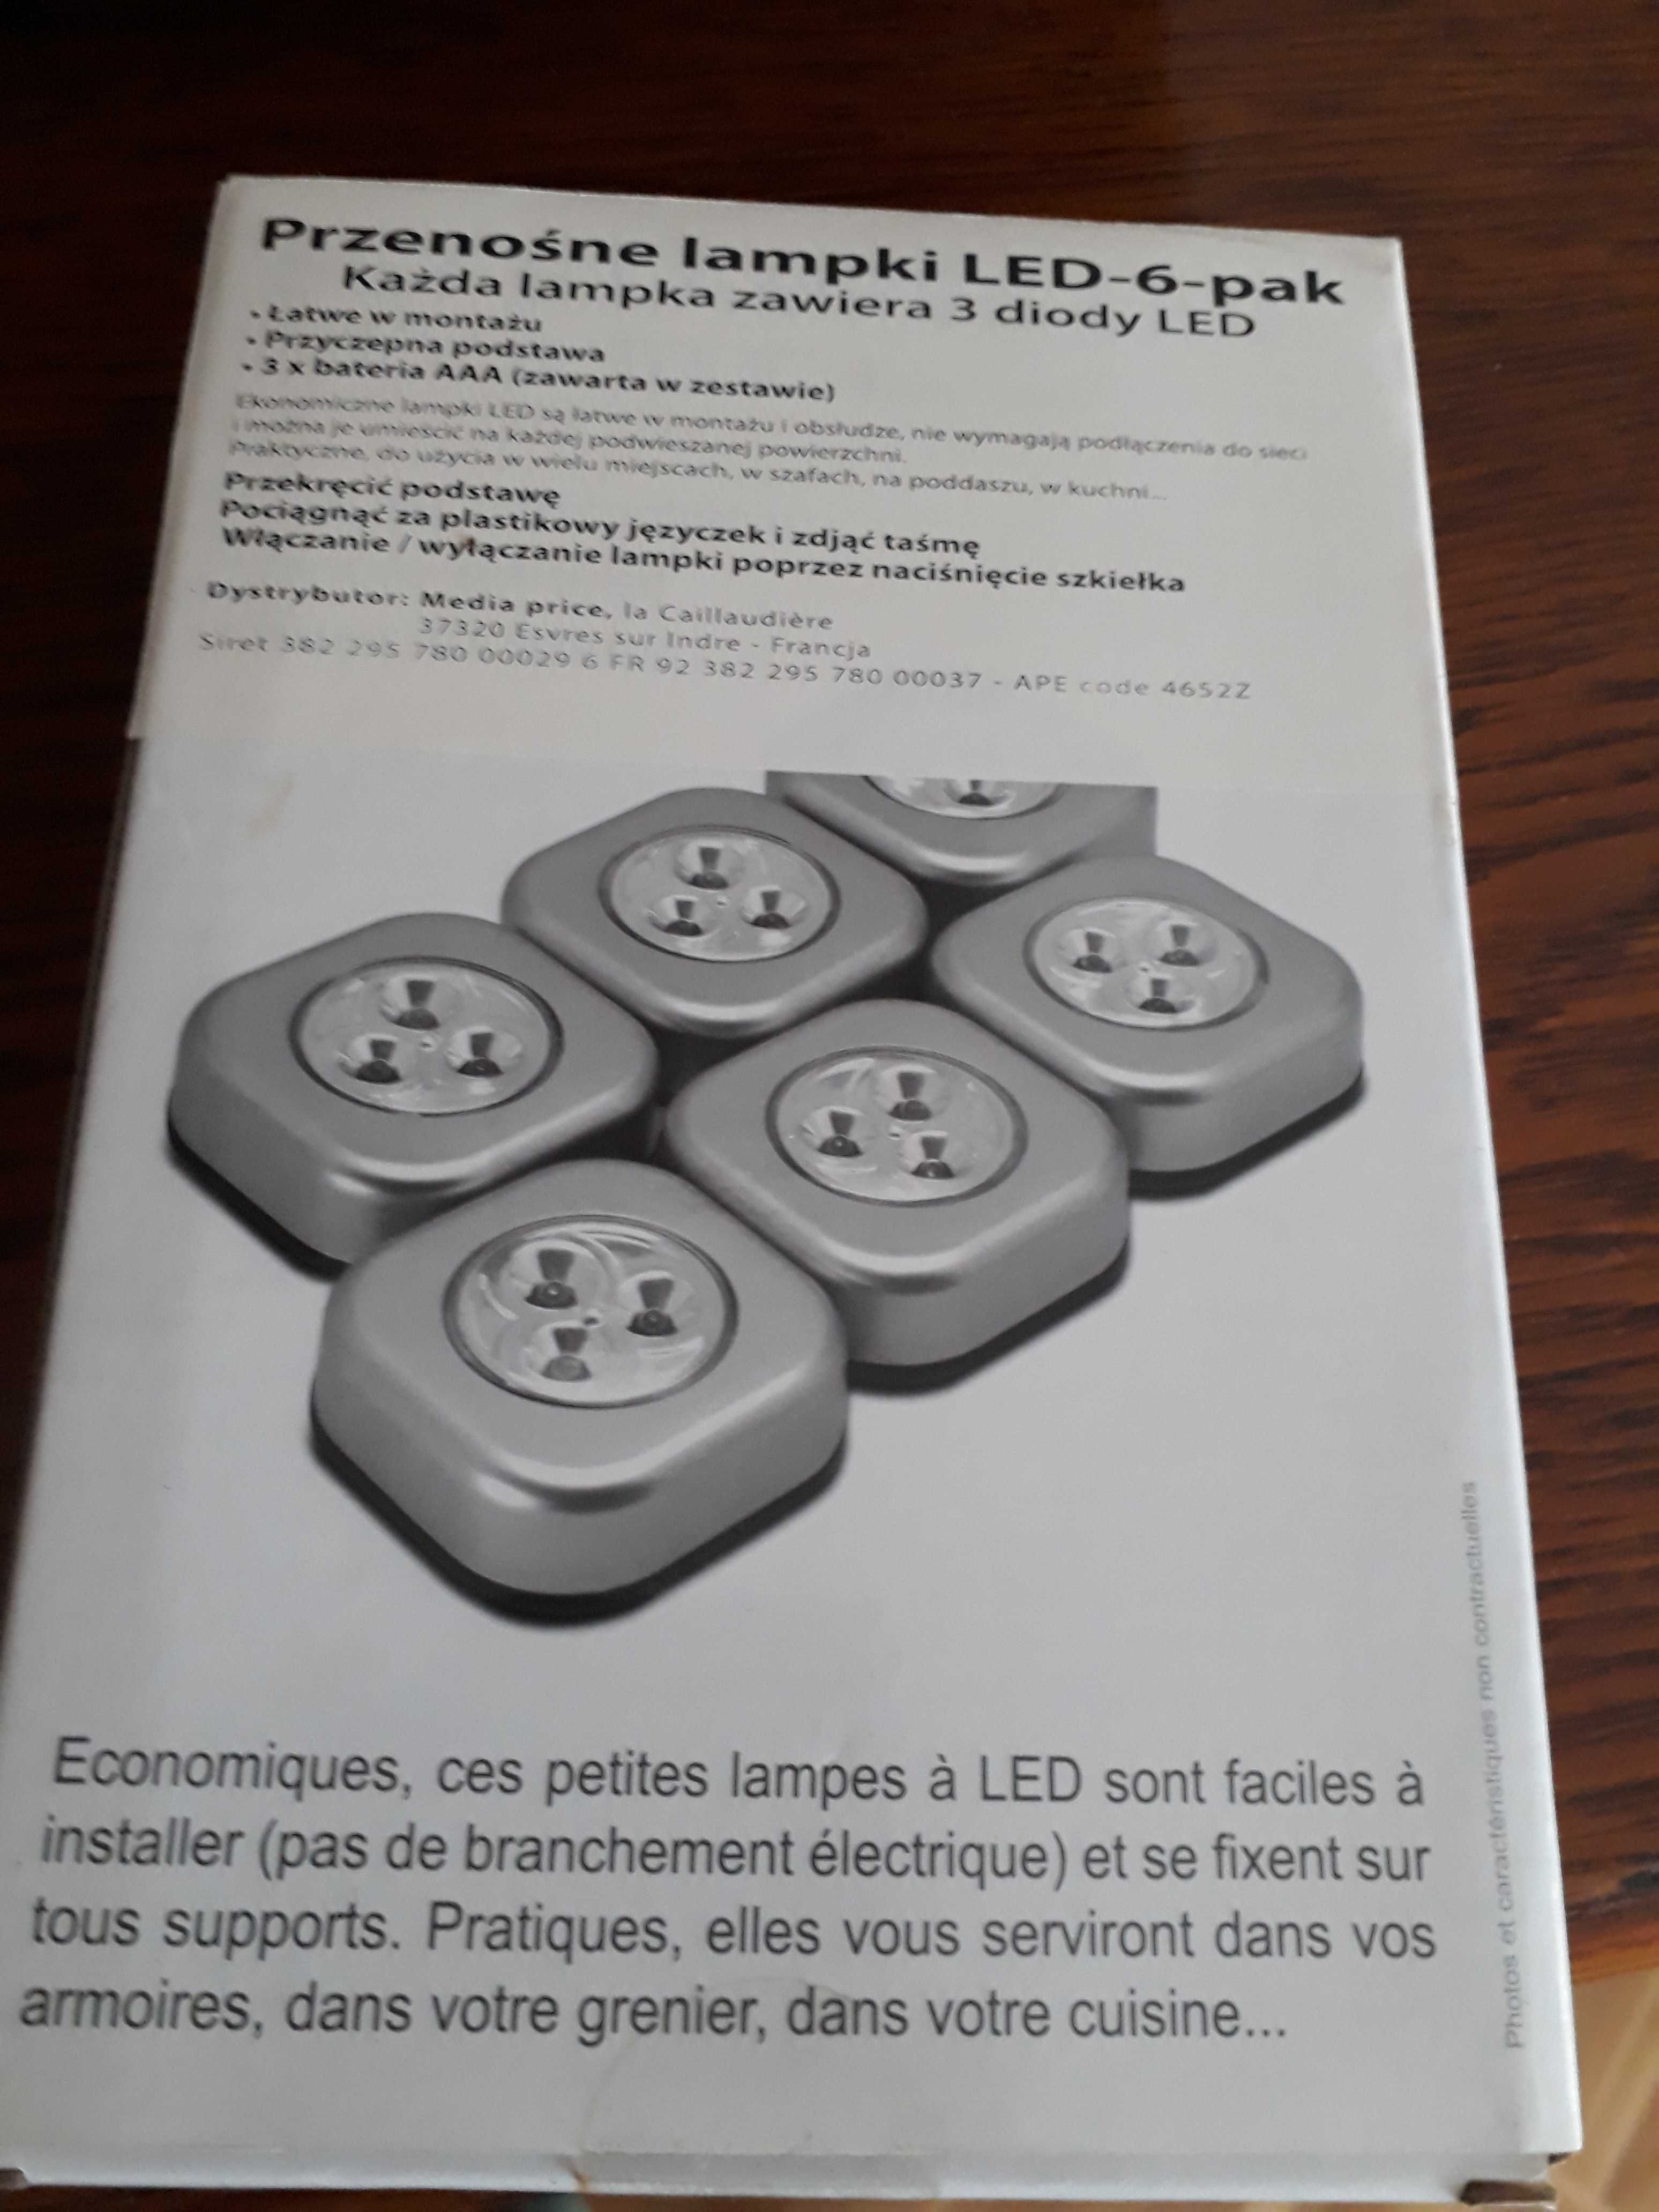 Przenośne lampki LED 6 pak 3 diody LED